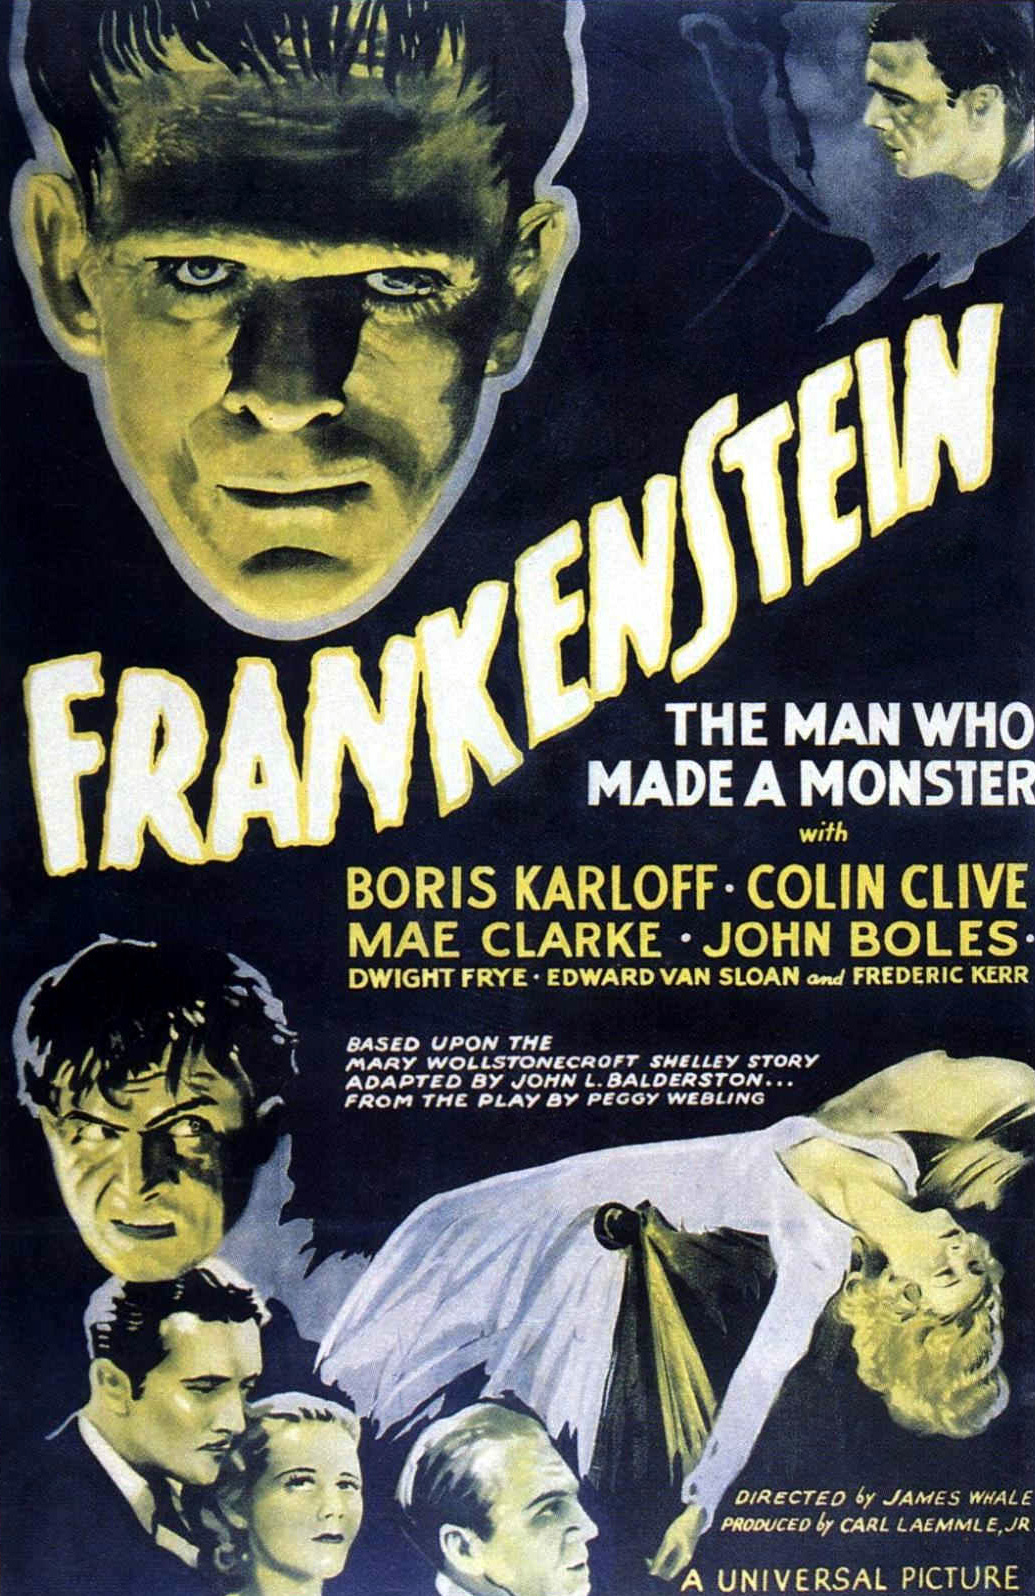 Frankenstein themed erotic movies